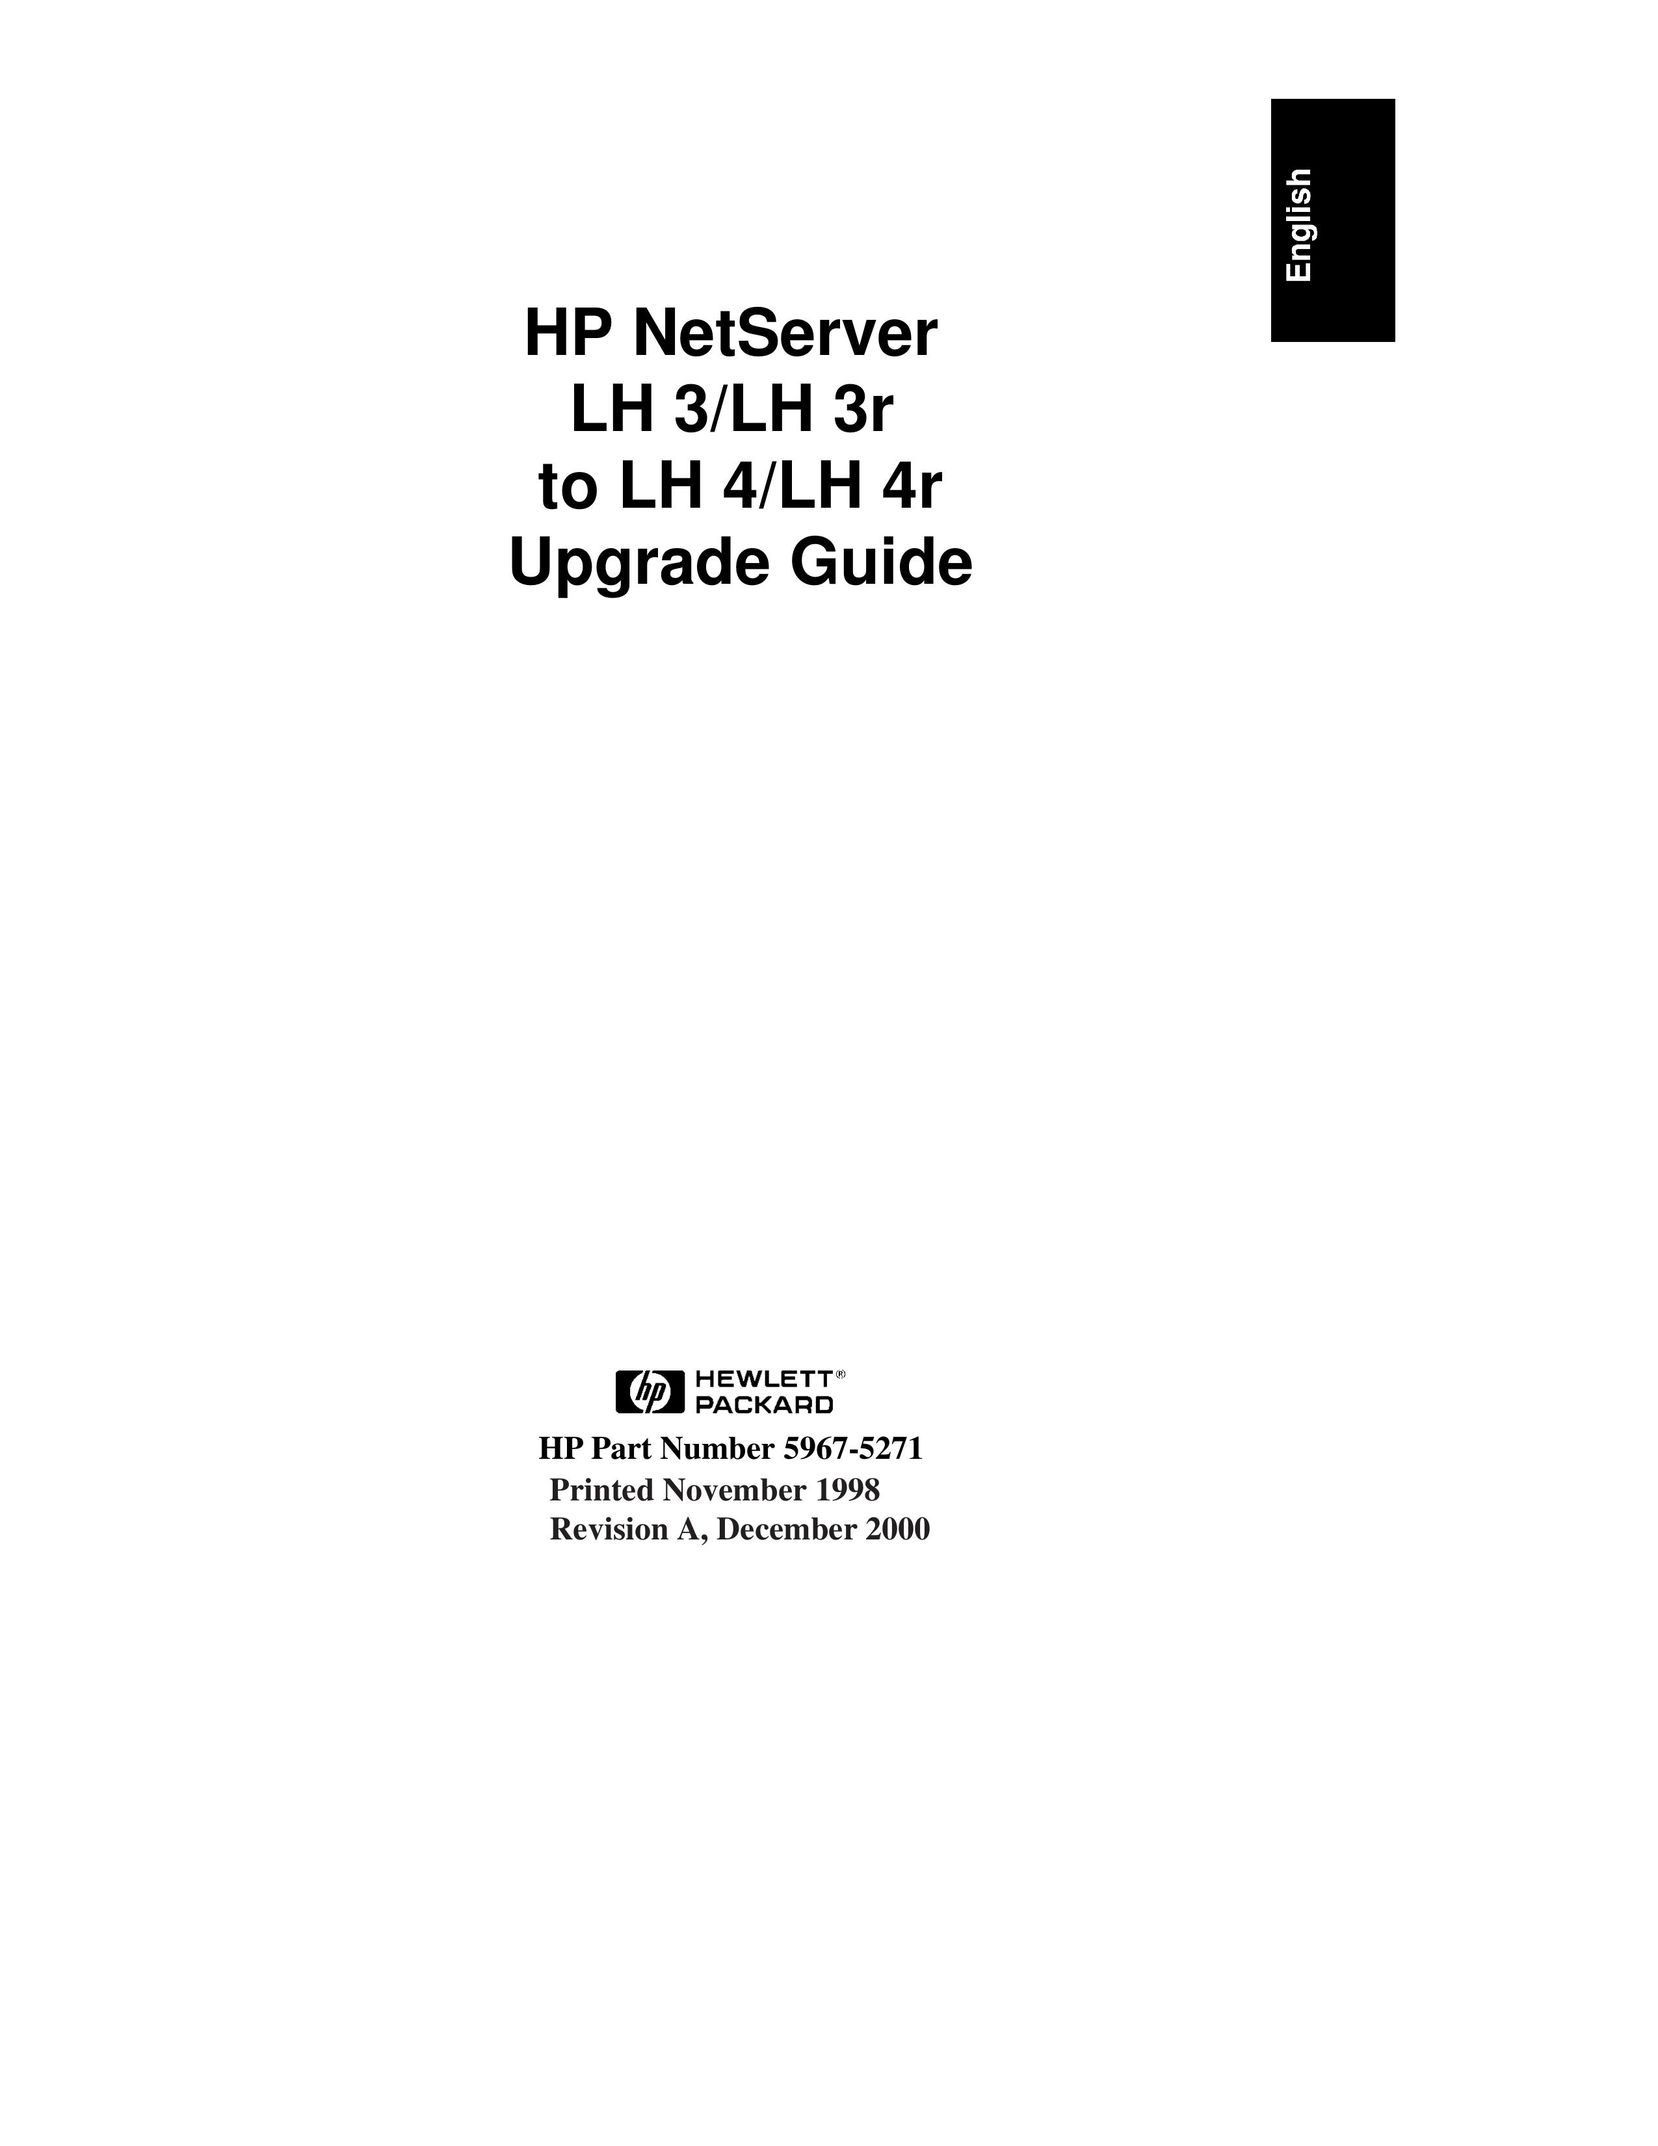 HP (Hewlett-Packard) LH 4 Network Cables User Manual